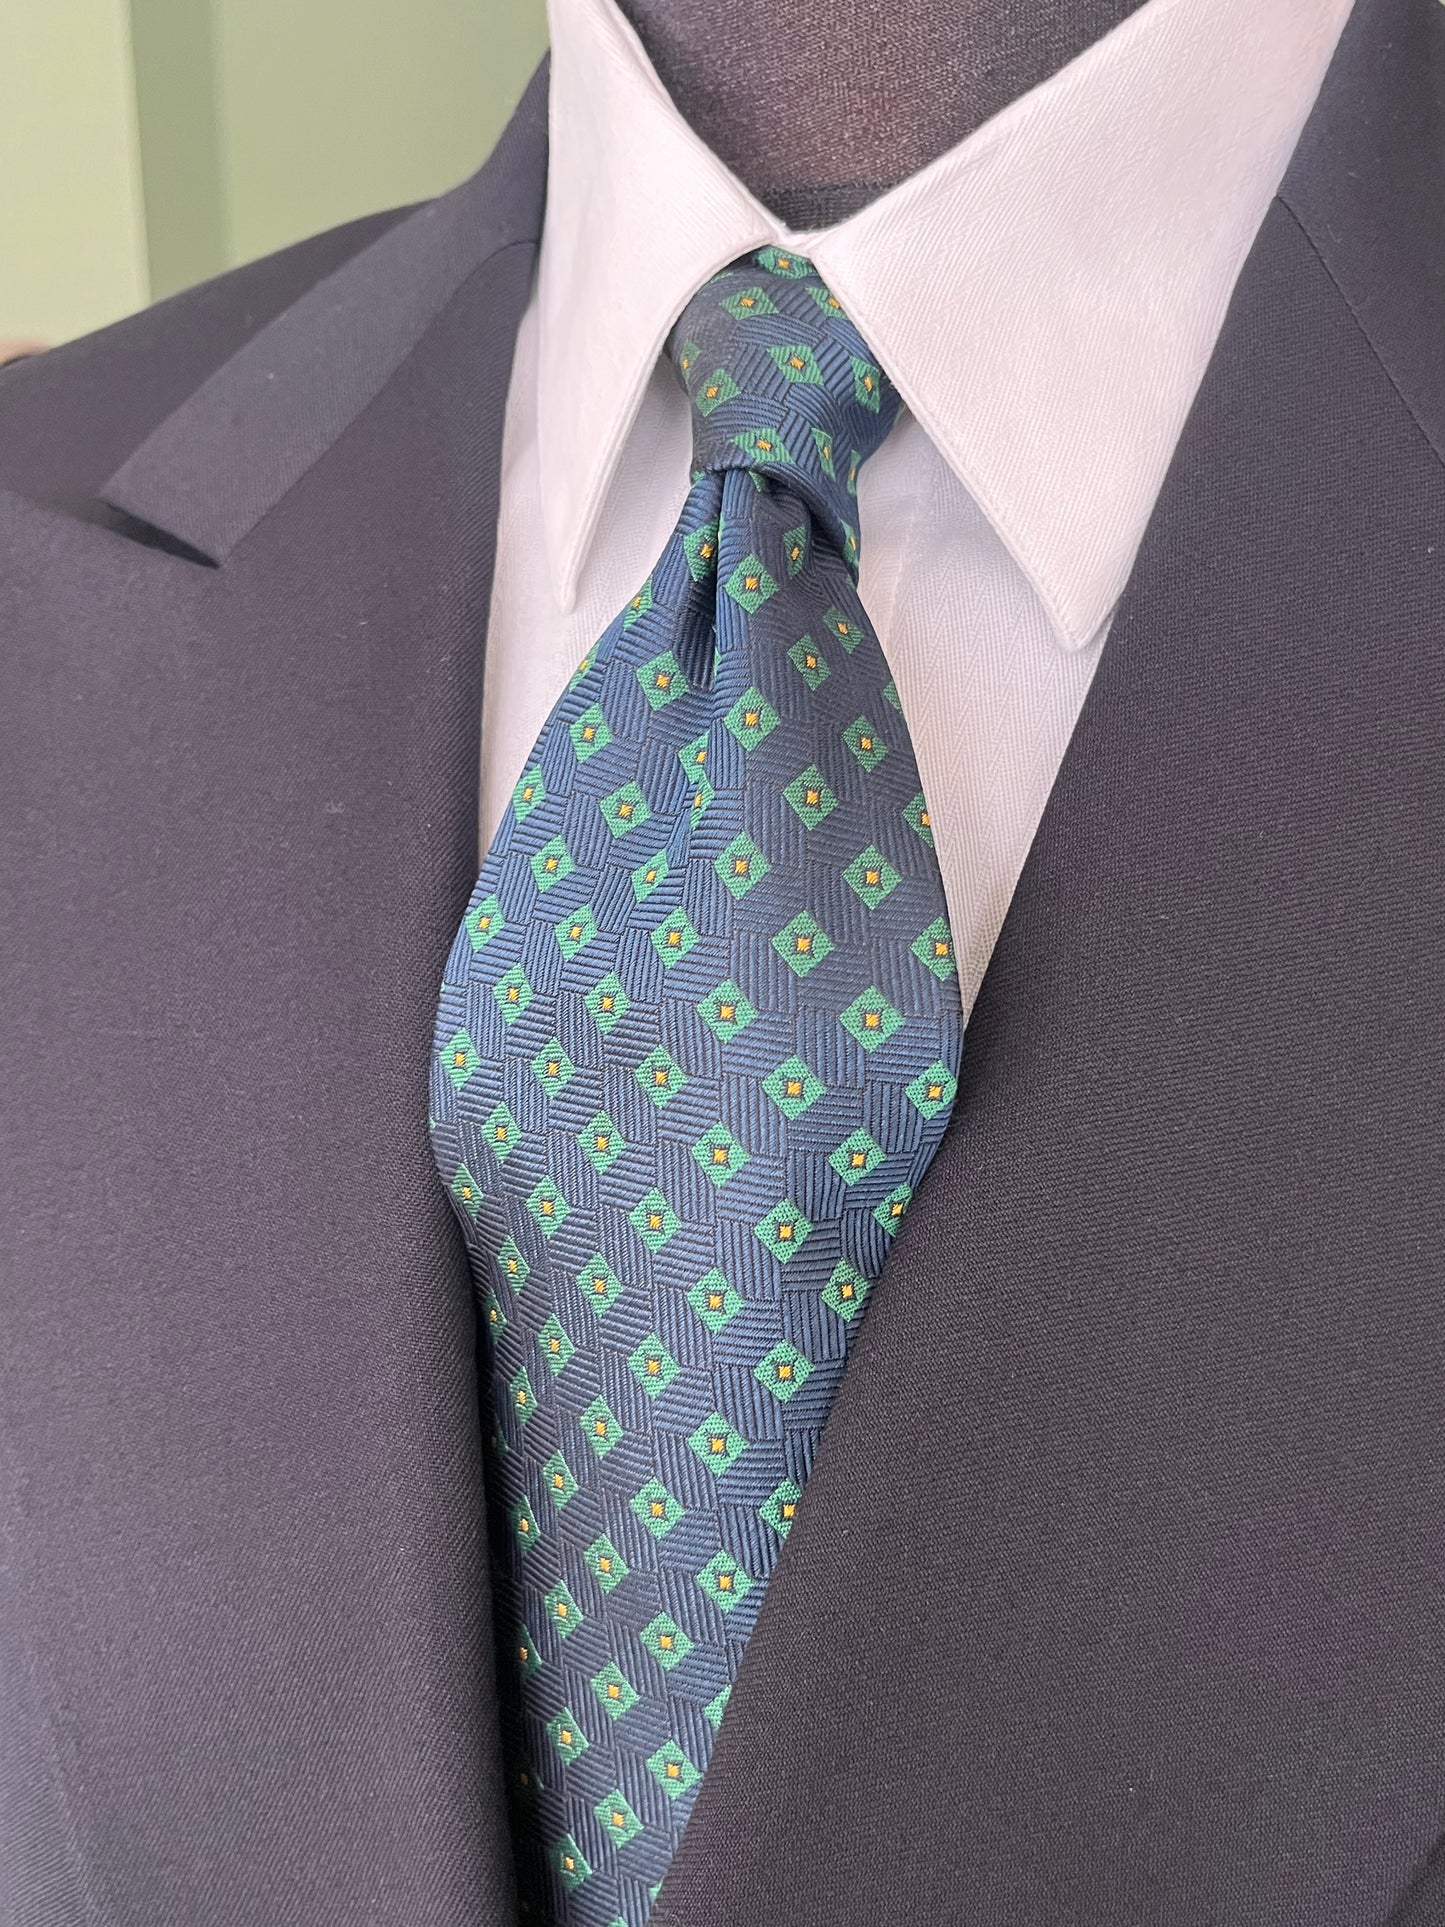 Cravatta anni ‘80 blu e verde